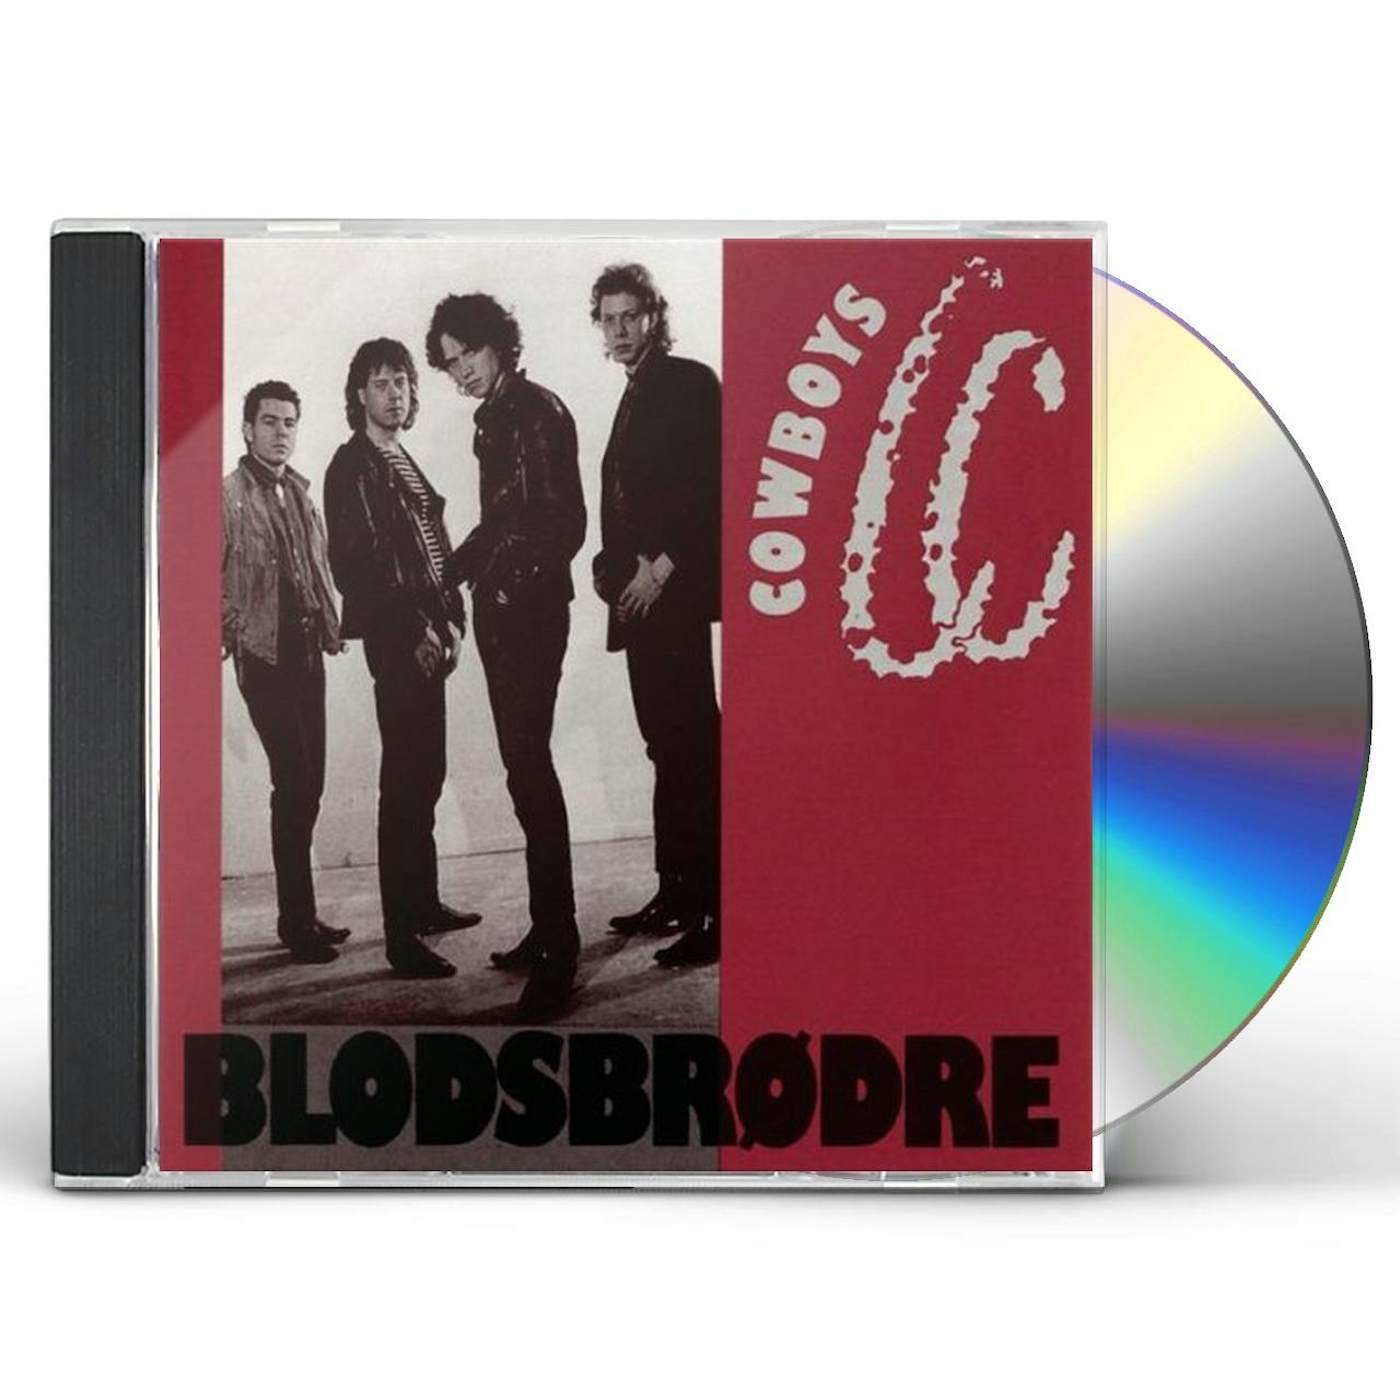 CC Cowboys BLODSBRODRE CD